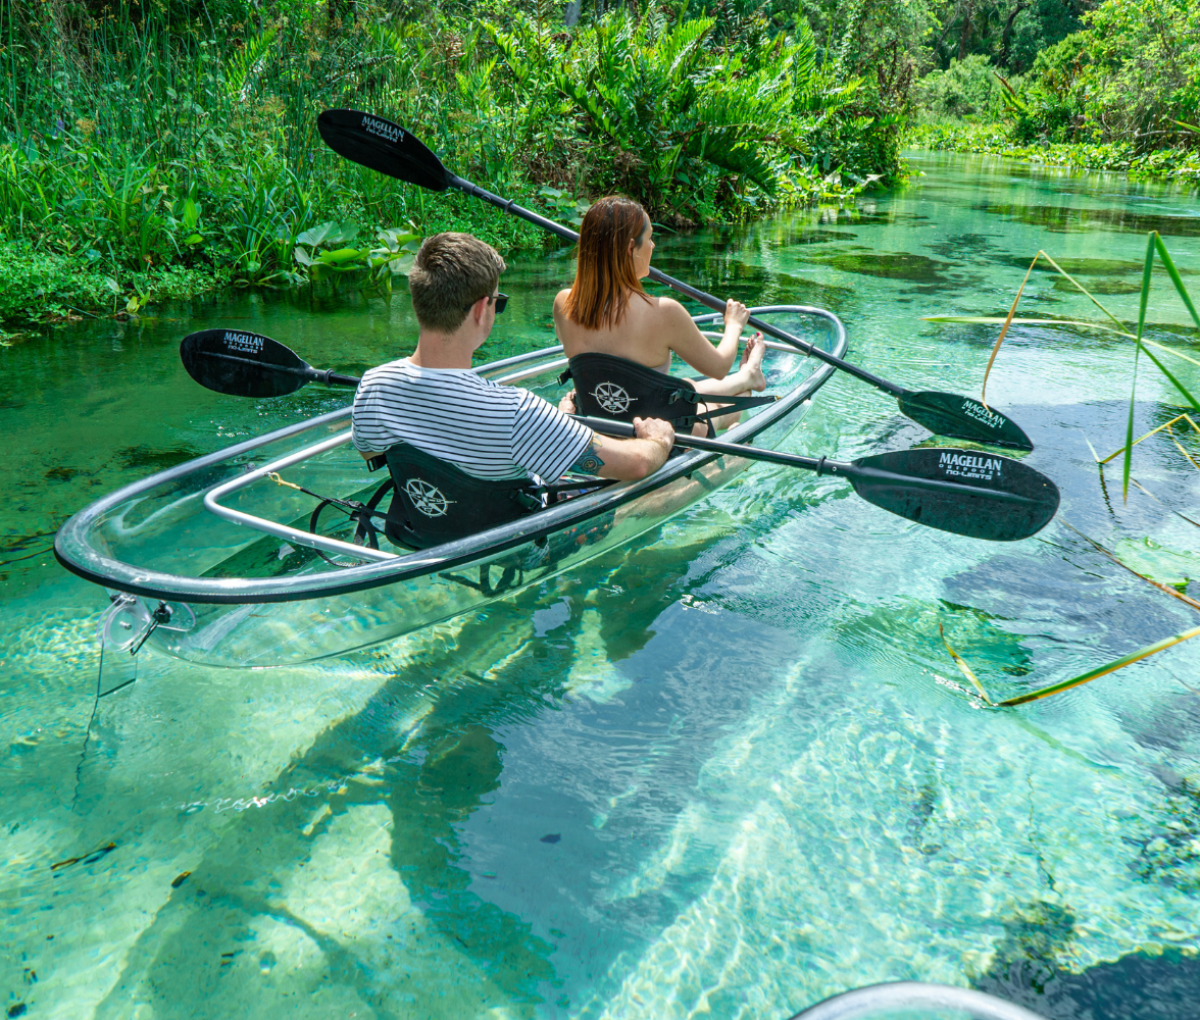 Kayaking in crystal clear waters, Orlando